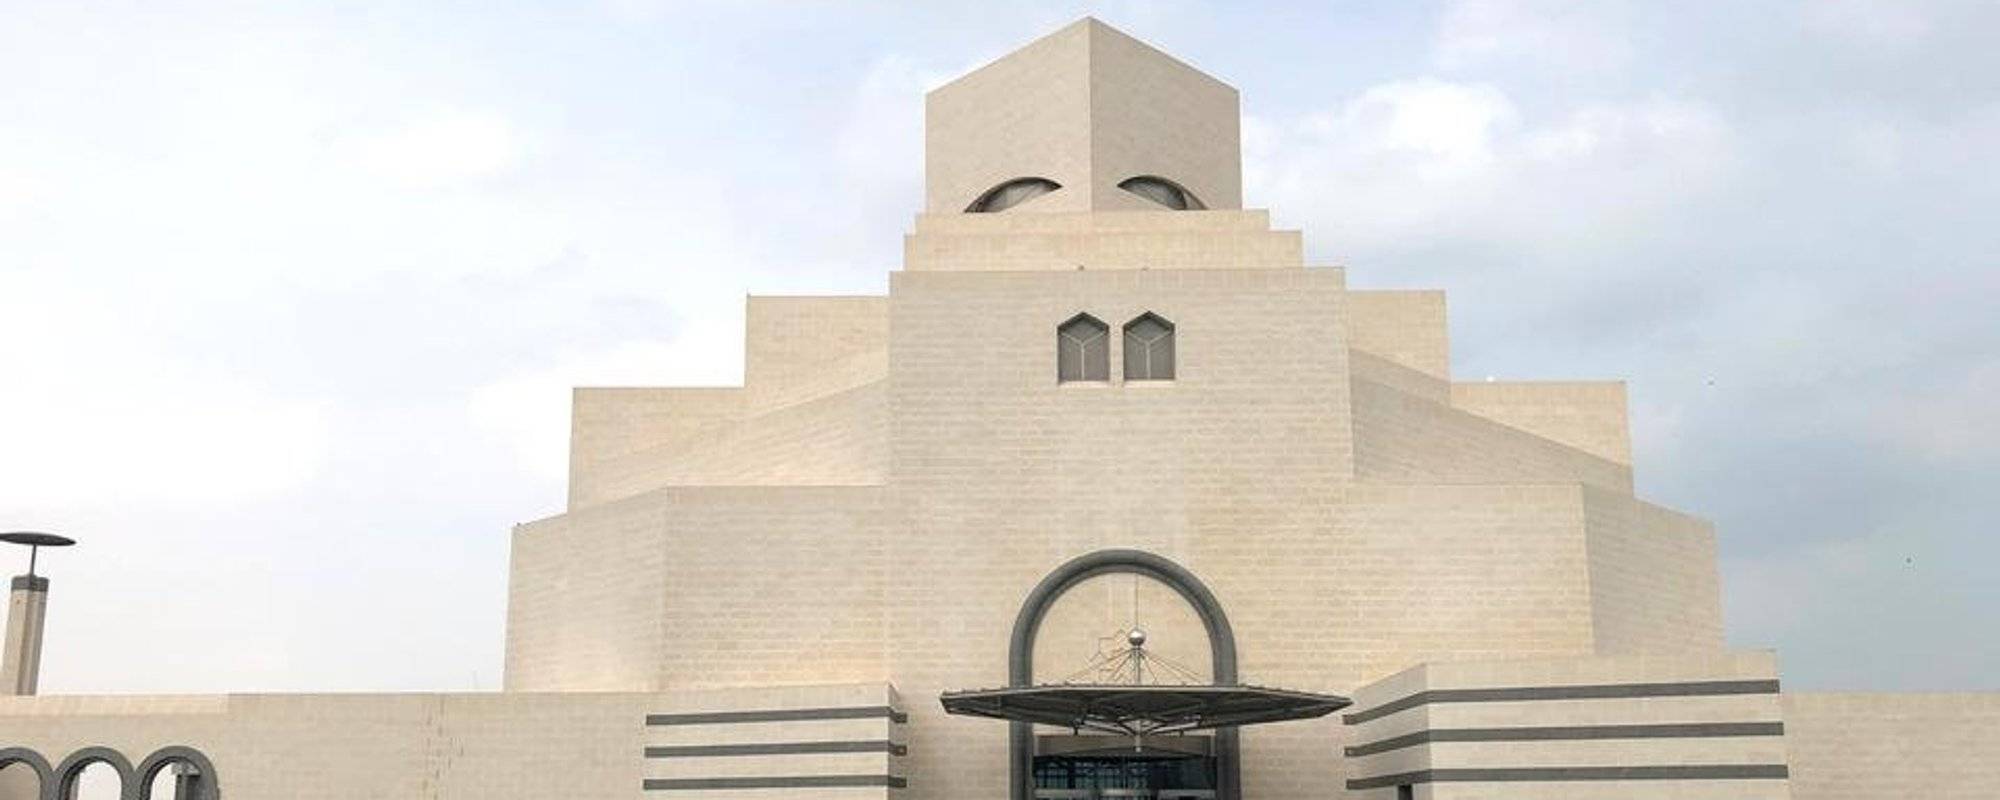 Traveling the World #165 - Museum of Islamic Art @ Doha, Qatar